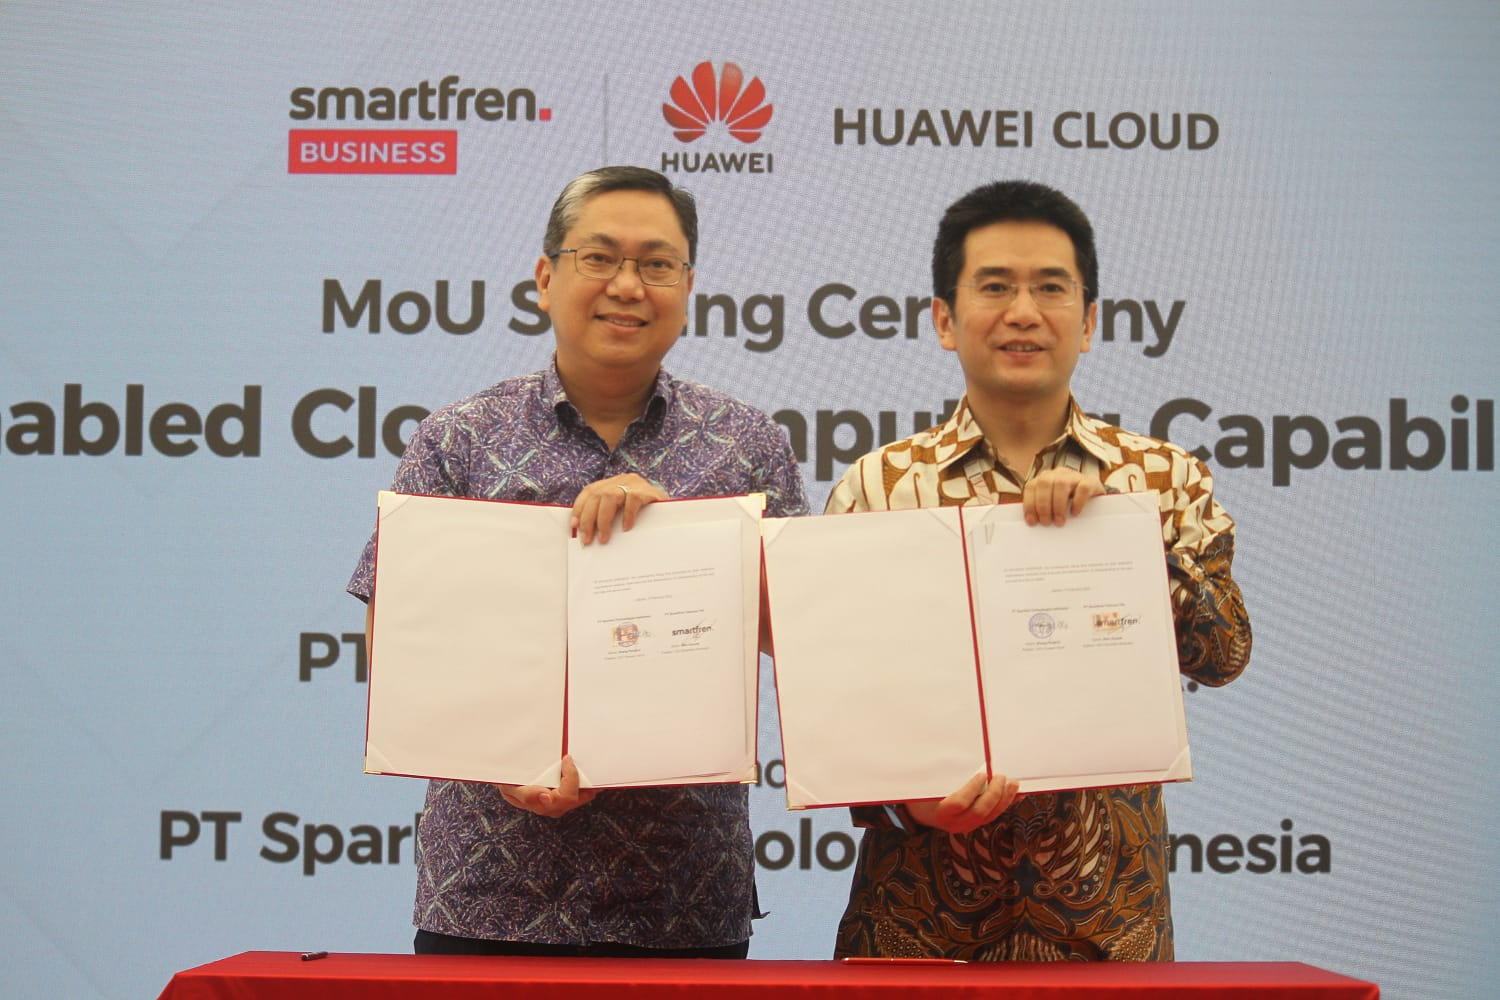 Smartfren melaksanakan kerja sama dengan Huawei untuk mempercepat pertumbuhan layanan digital berbentuk cloud (Ashar/SinPo.id)